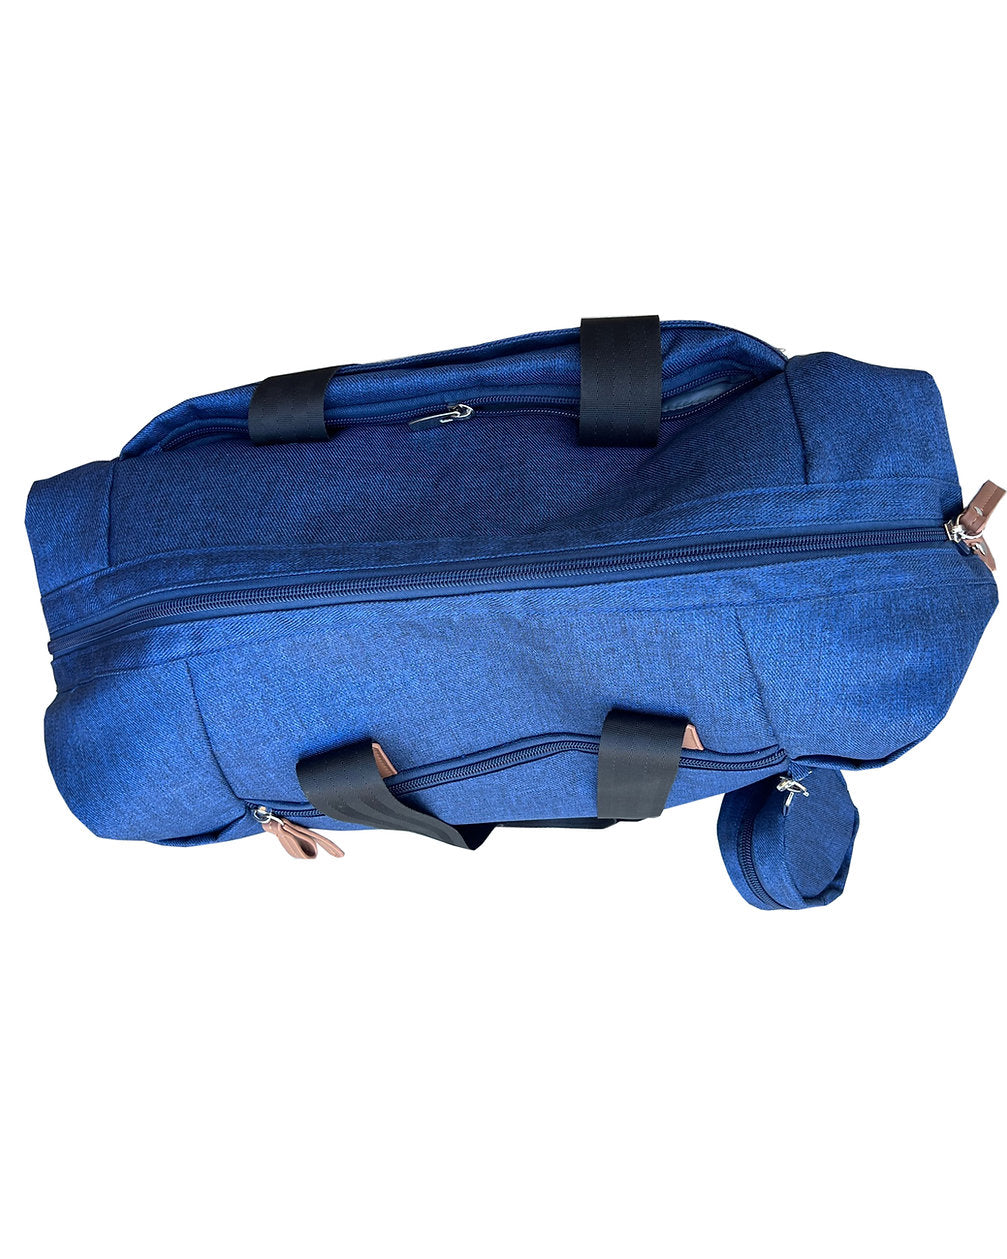 Lightweight Waterproof Concealed Carry Diaper Bag - Hiding Hilda, LLC